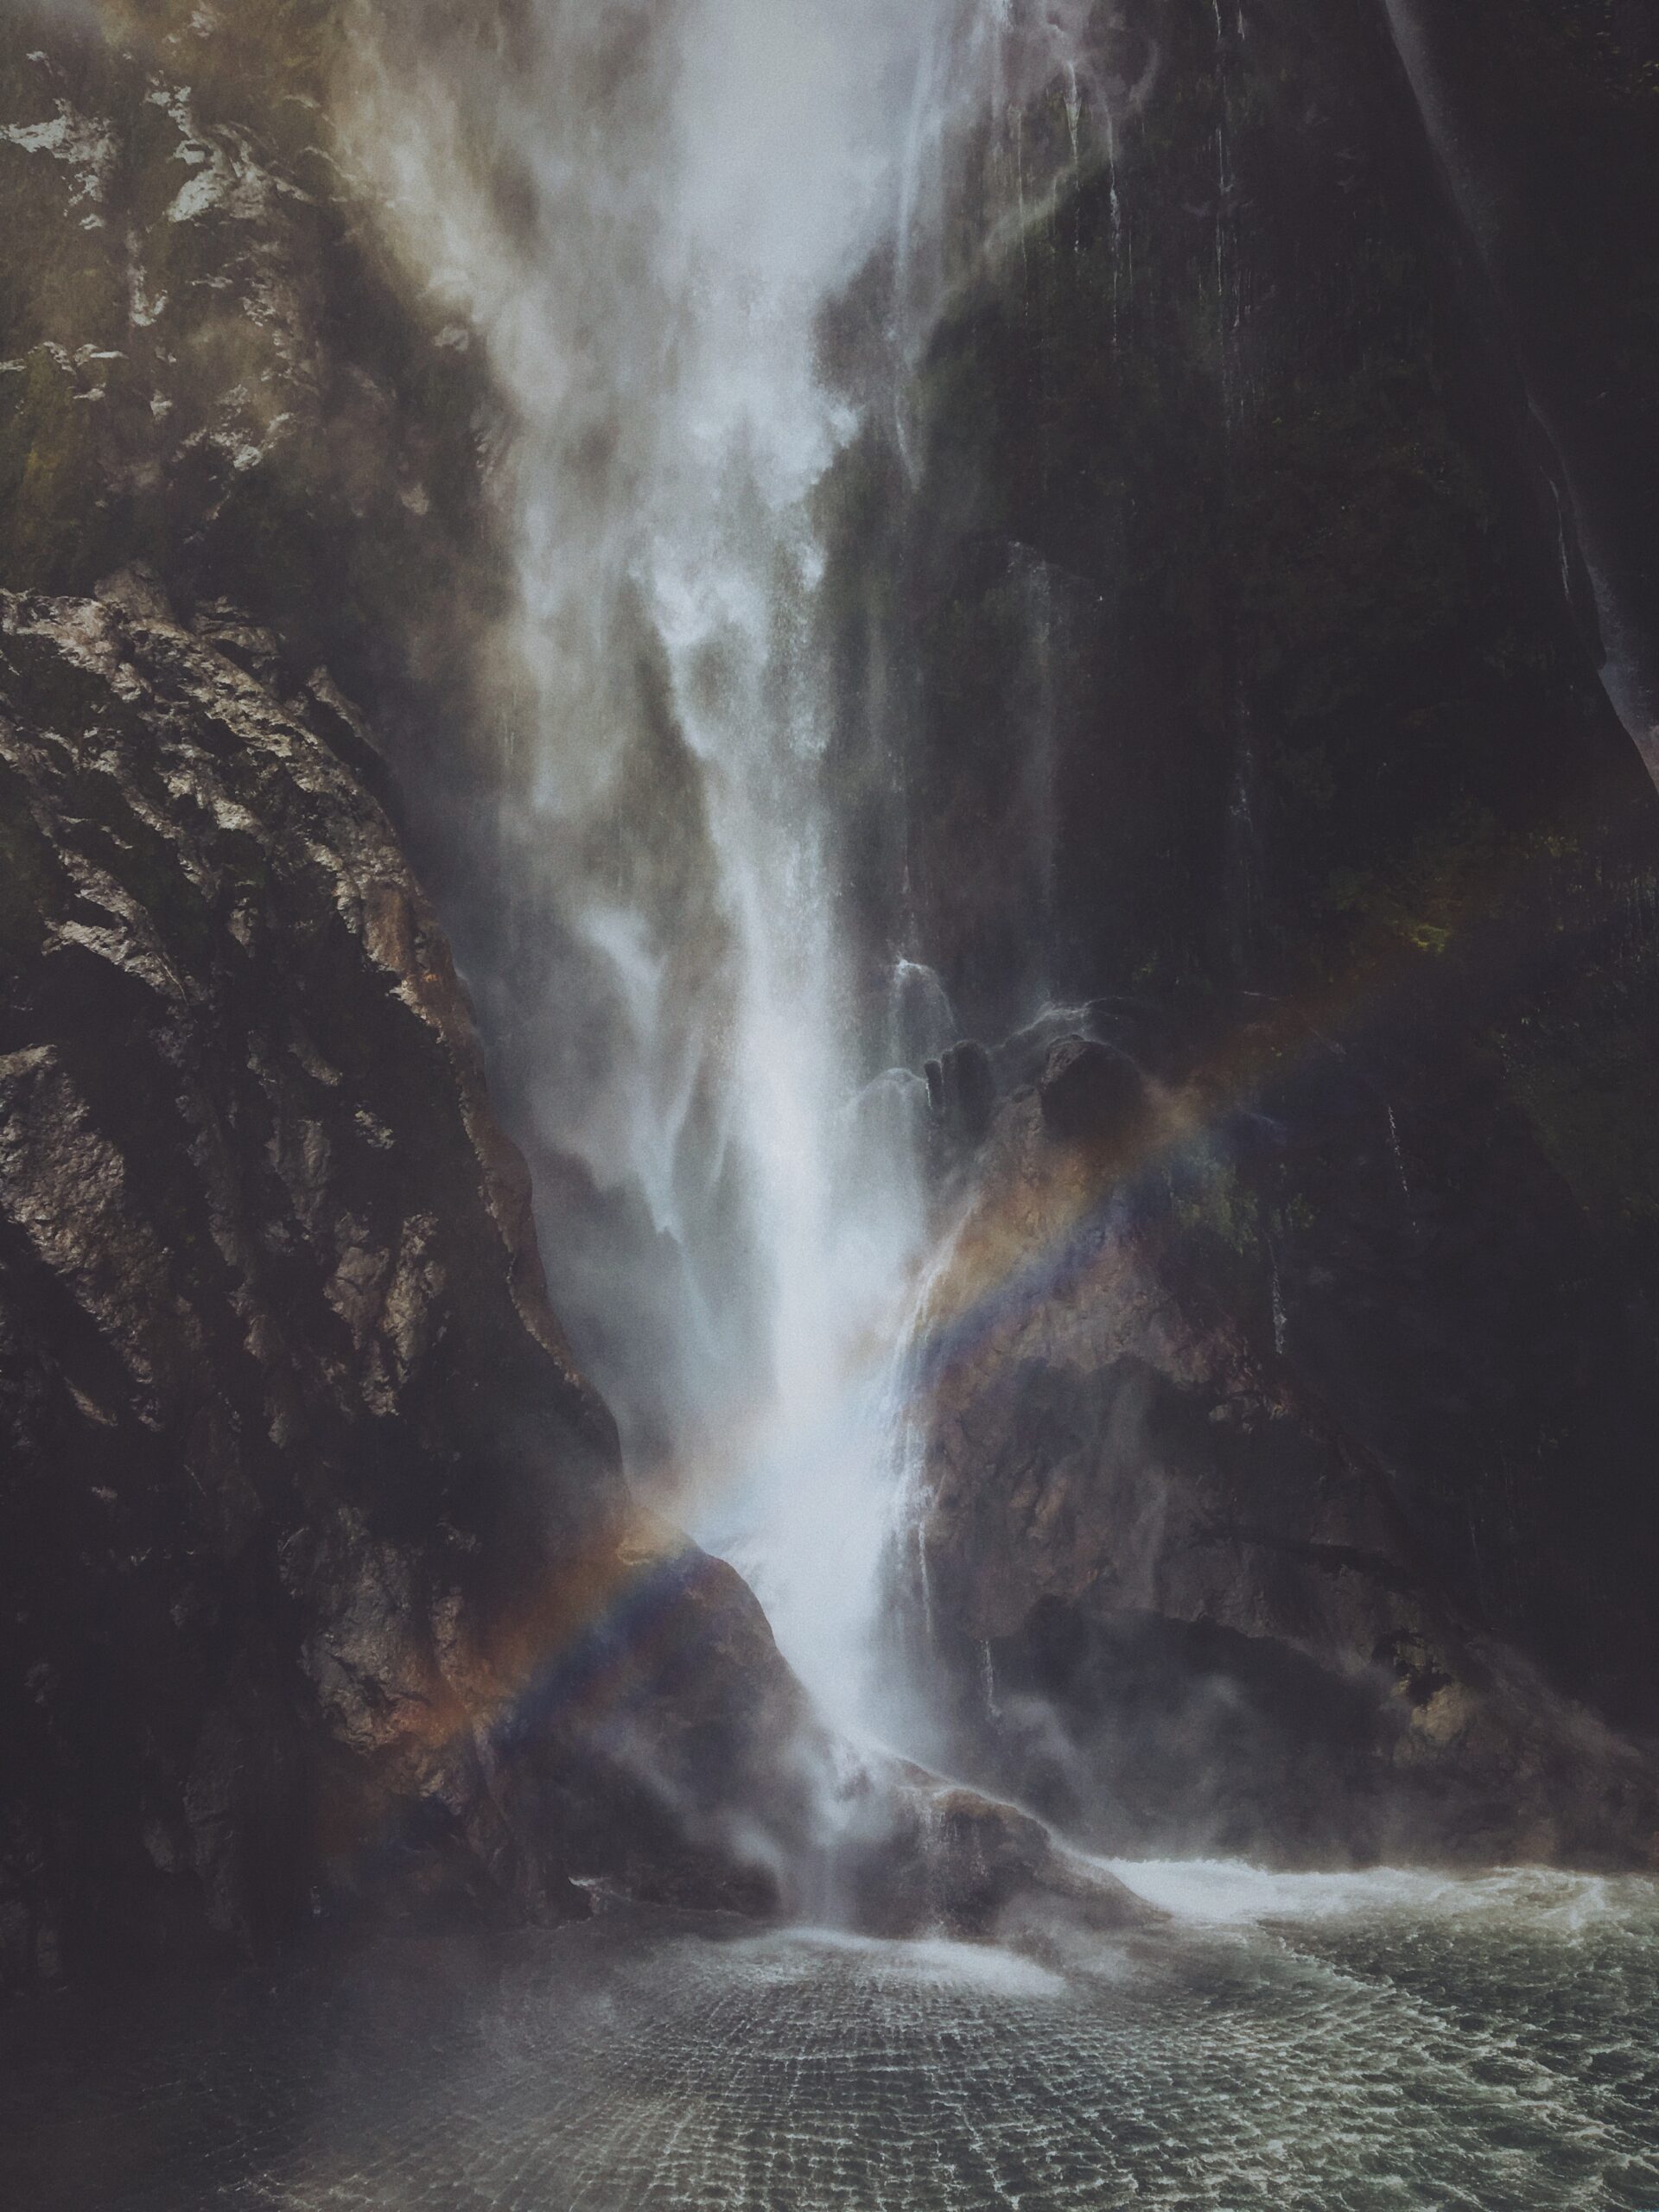 jeff-finley-Waterfall rainbow image-unsplash